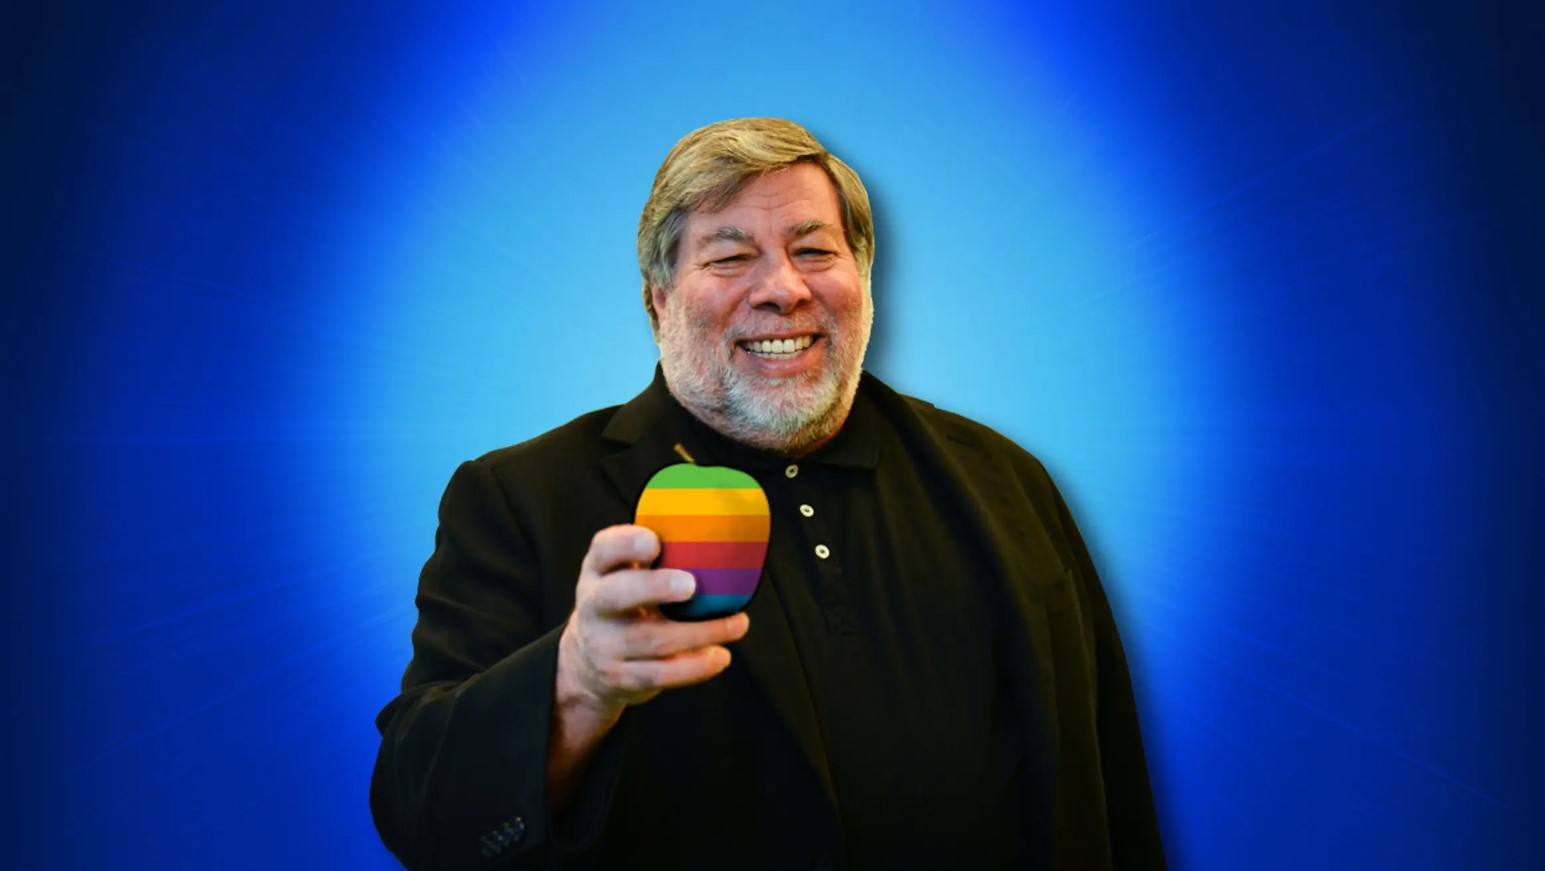 Steve Wozniak image